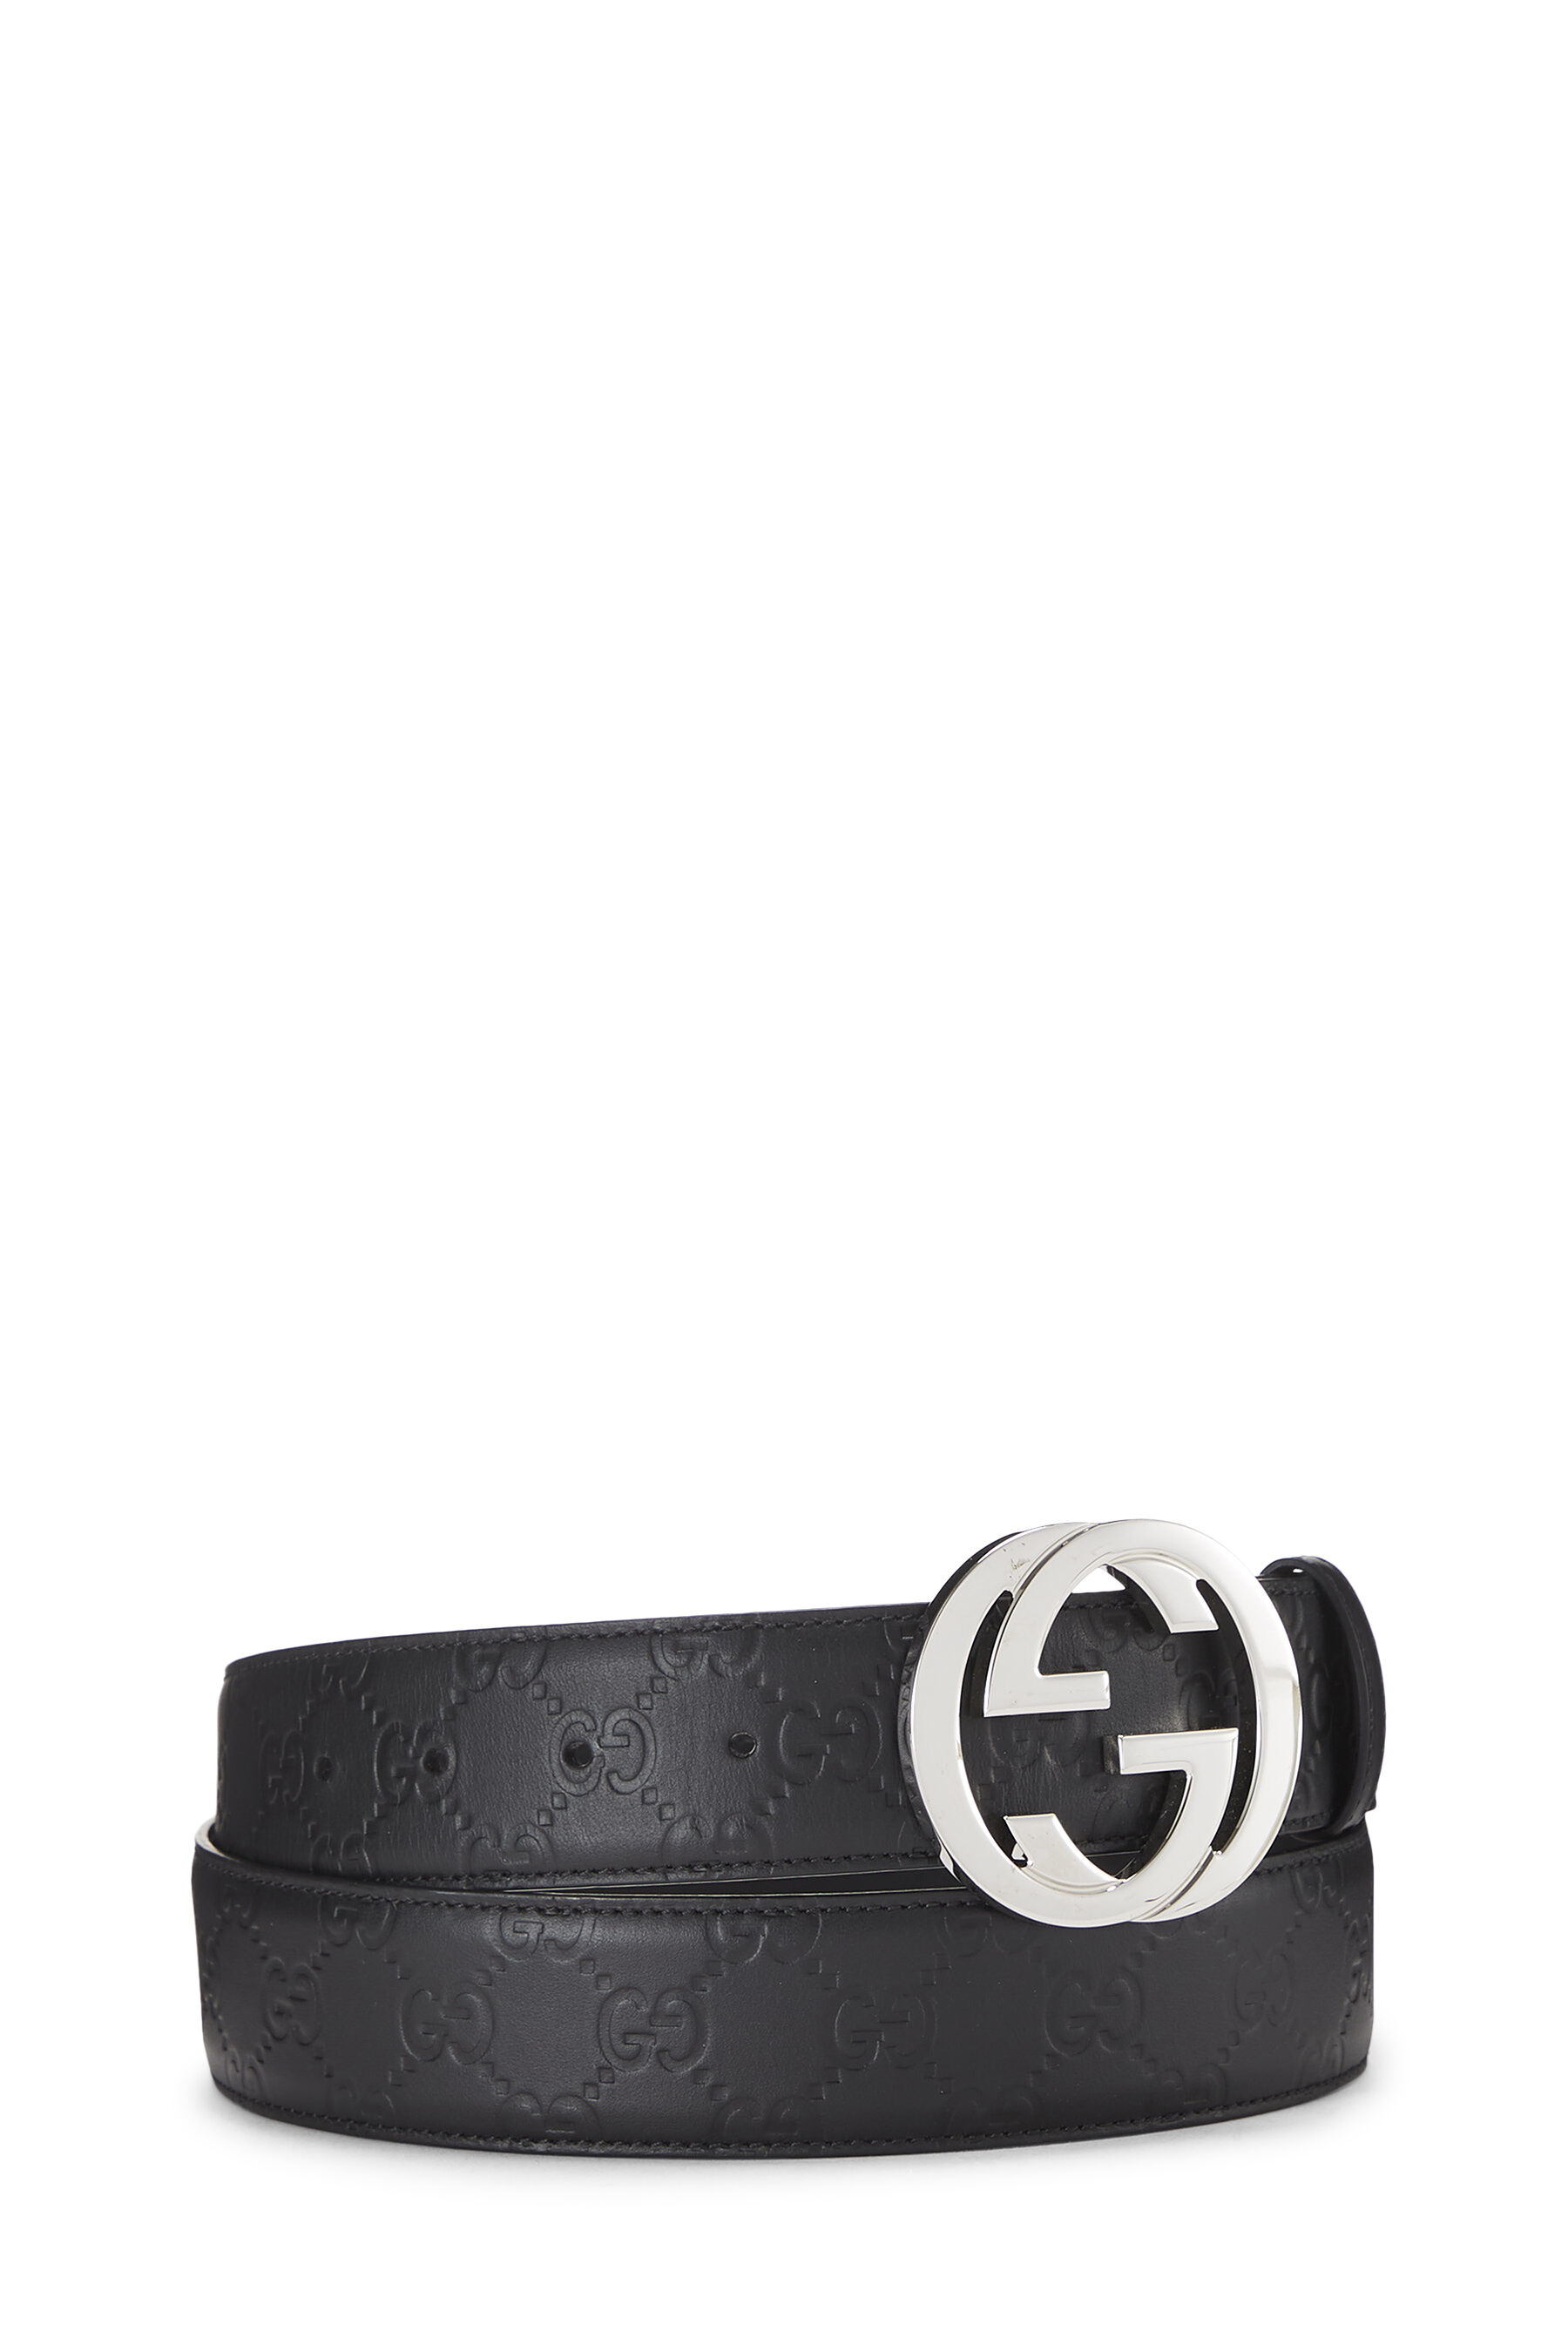 Gucci Black Microguccissima Leather Interlocking GG Belt